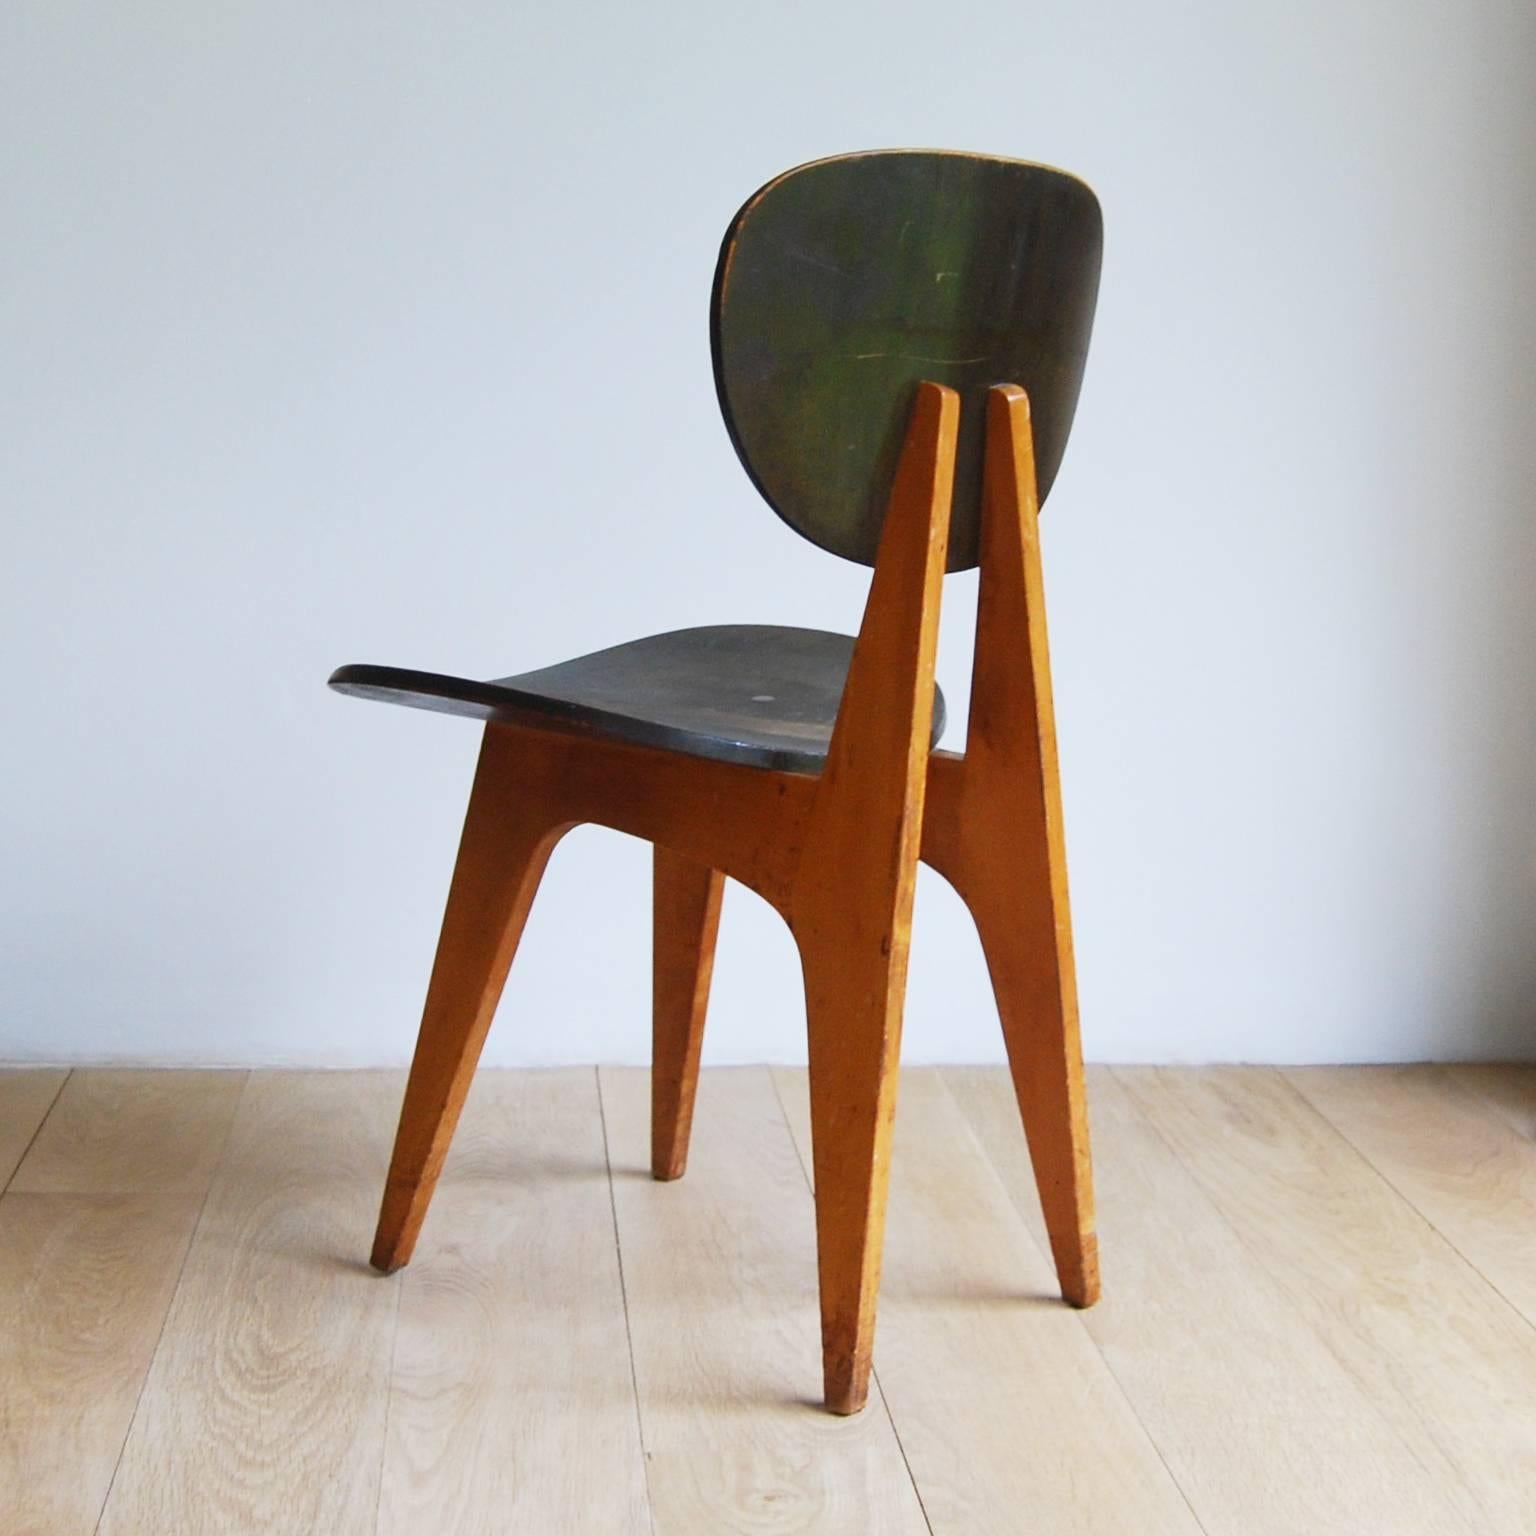 Patinated Pair of Side Chairs, Model No. 3221, by Junzo Sakakura